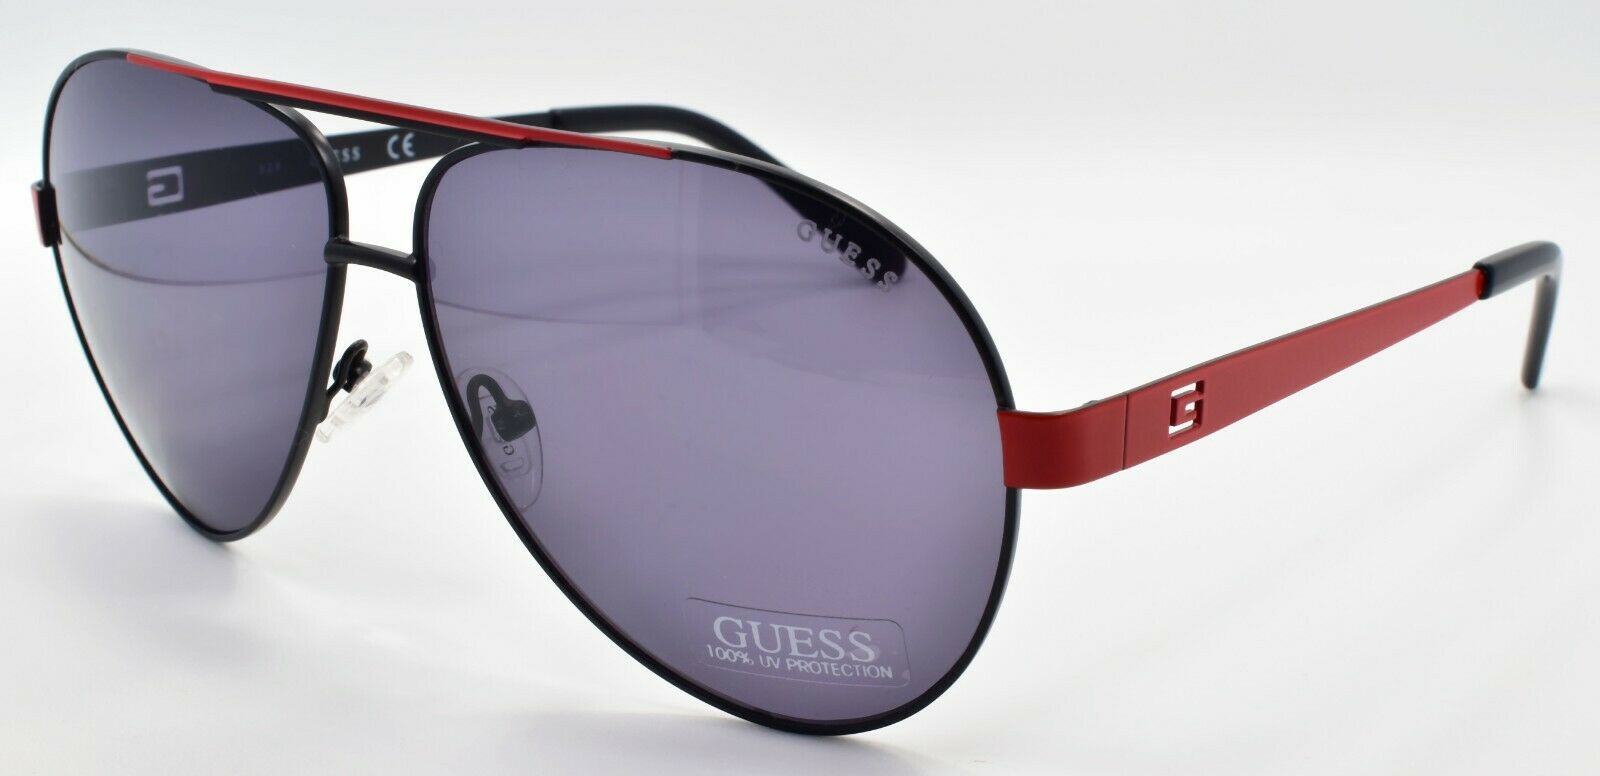 1-GUESS GU6969 01A Men's Sunglasses Aviator 61-11-145 Black & Red / Smoke-889214118400-IKSpecs